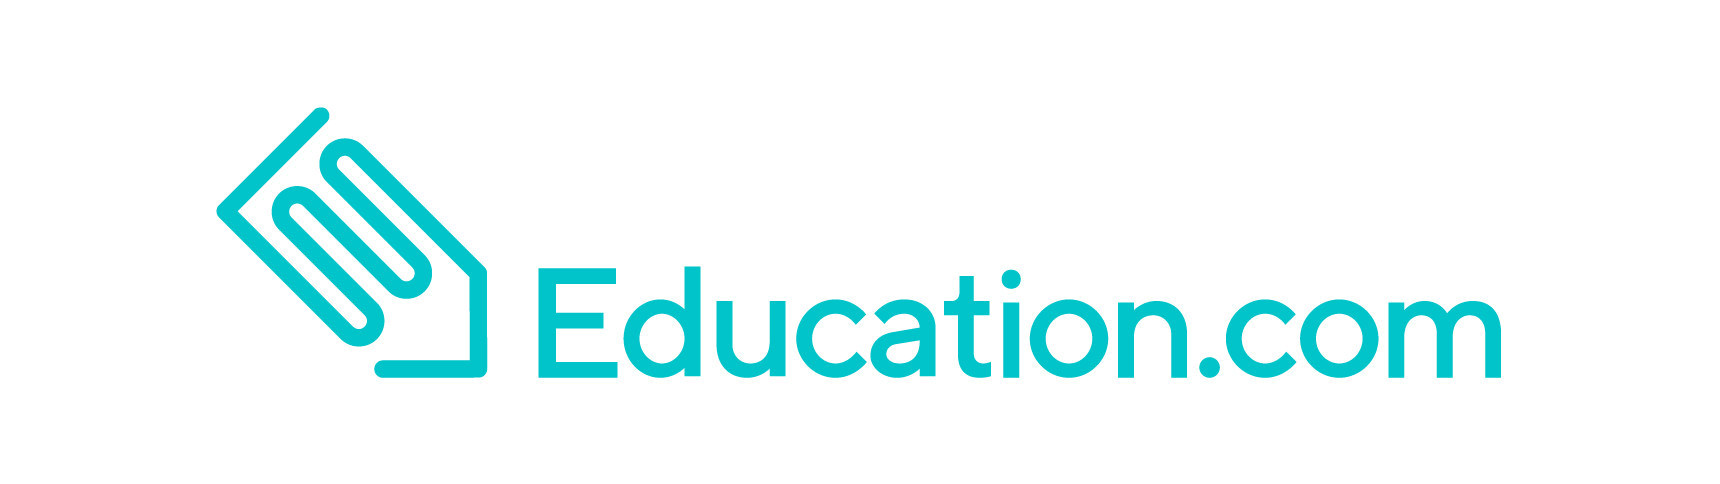 education.com free